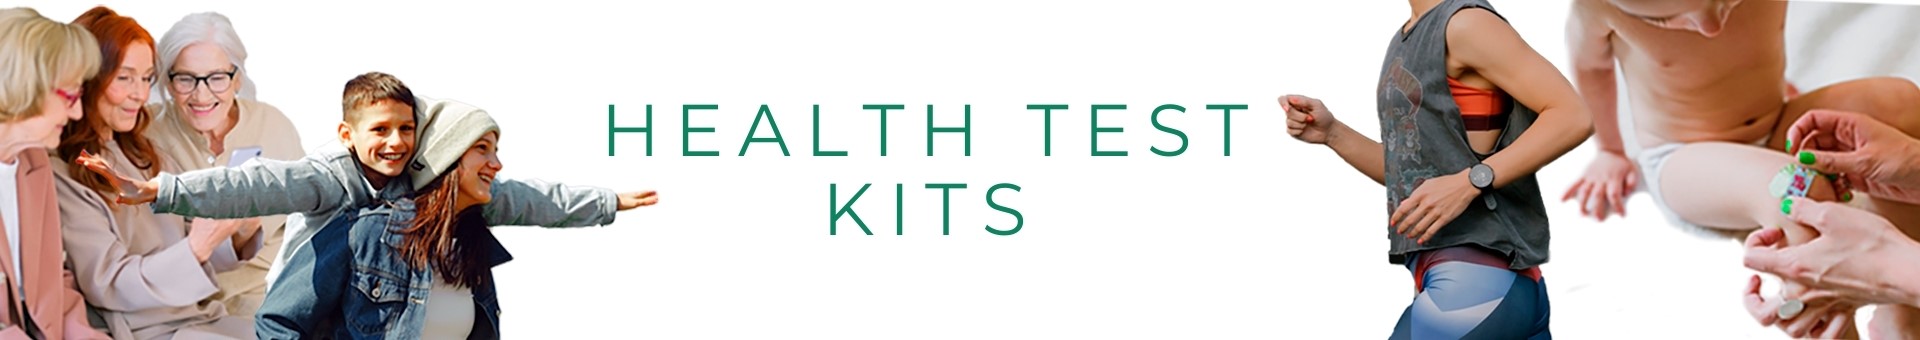 Health Test Kits